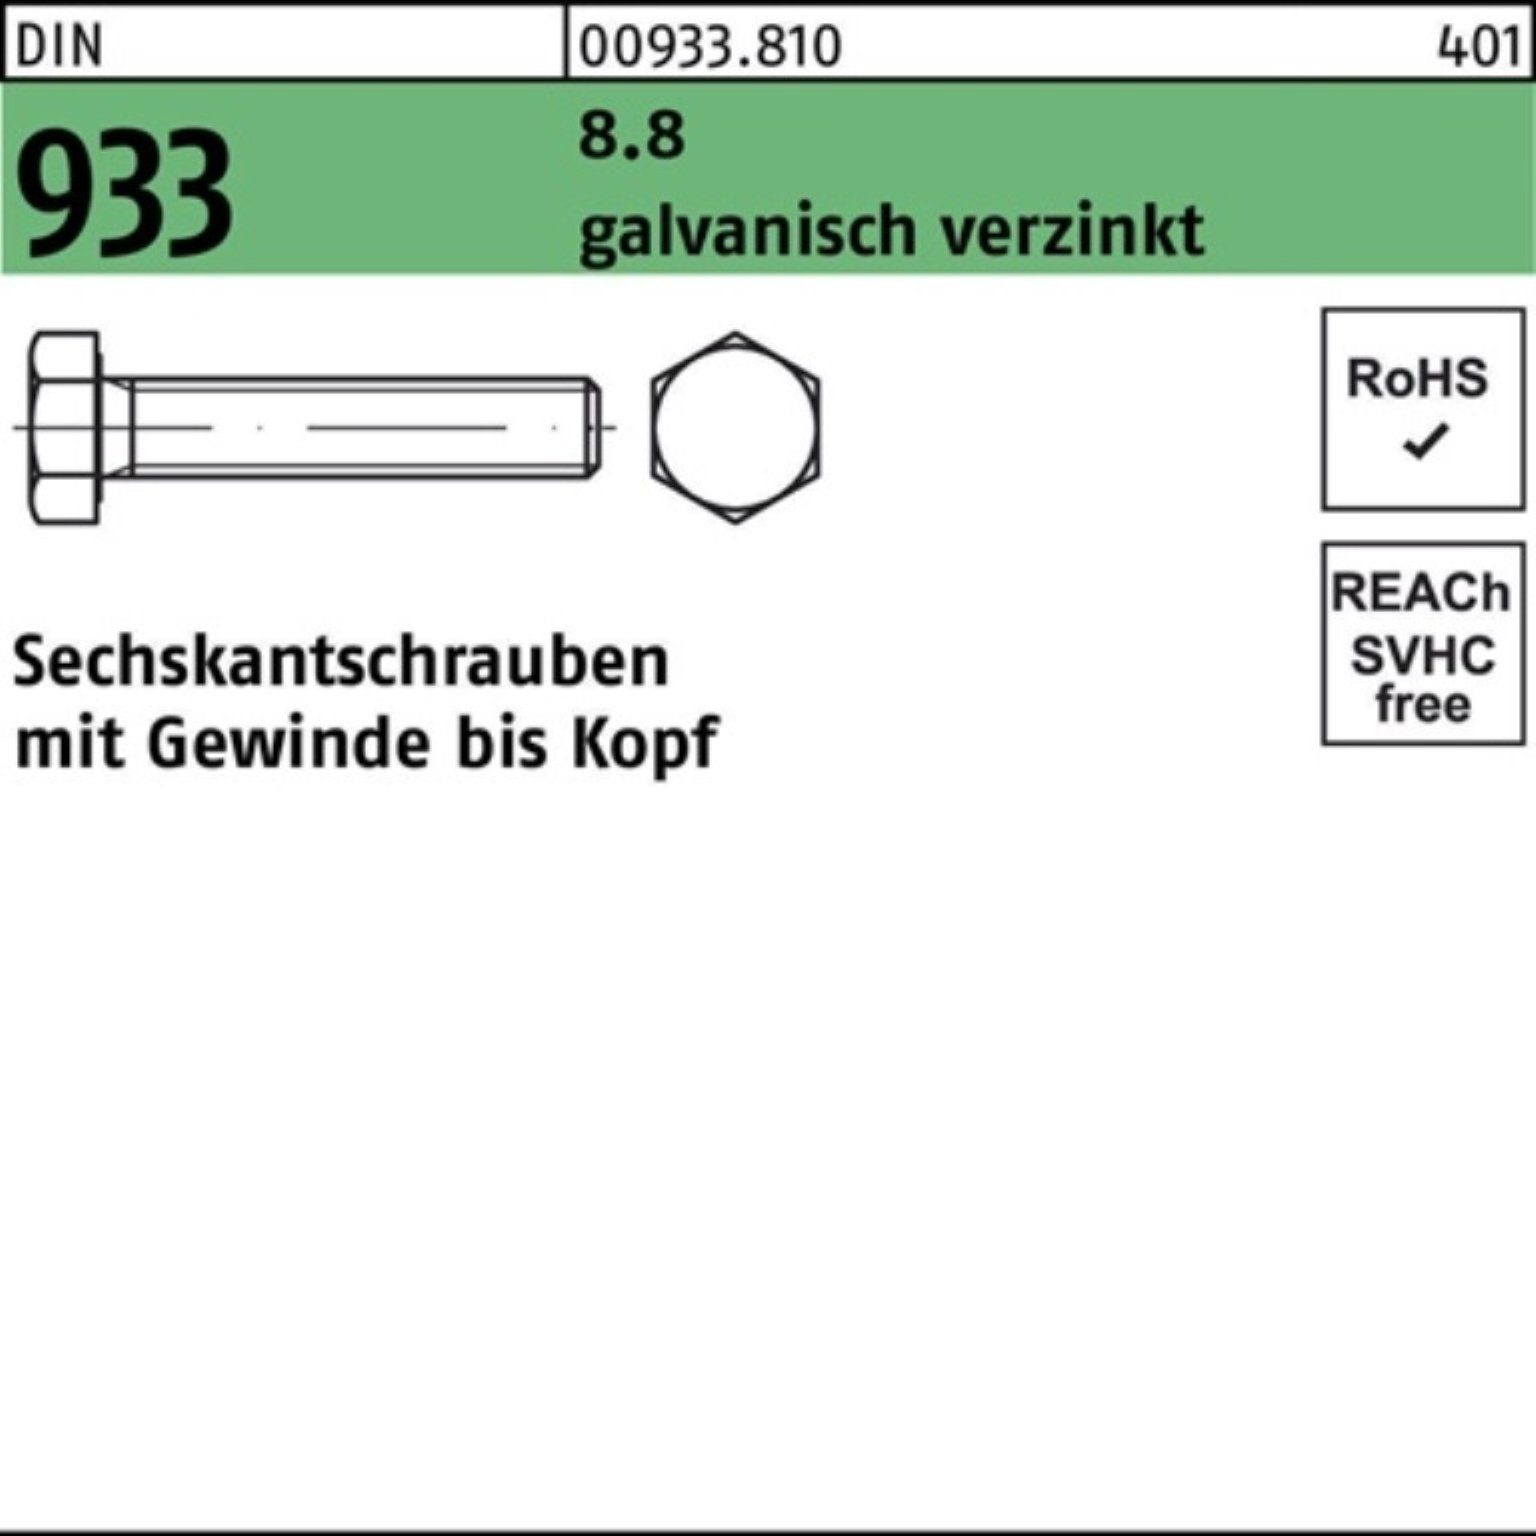 Sechskantschraube Reyher 1 250 Stü Sechskantschraube galv.verz. 933 Pack M20x 100er DIN VG 8.8